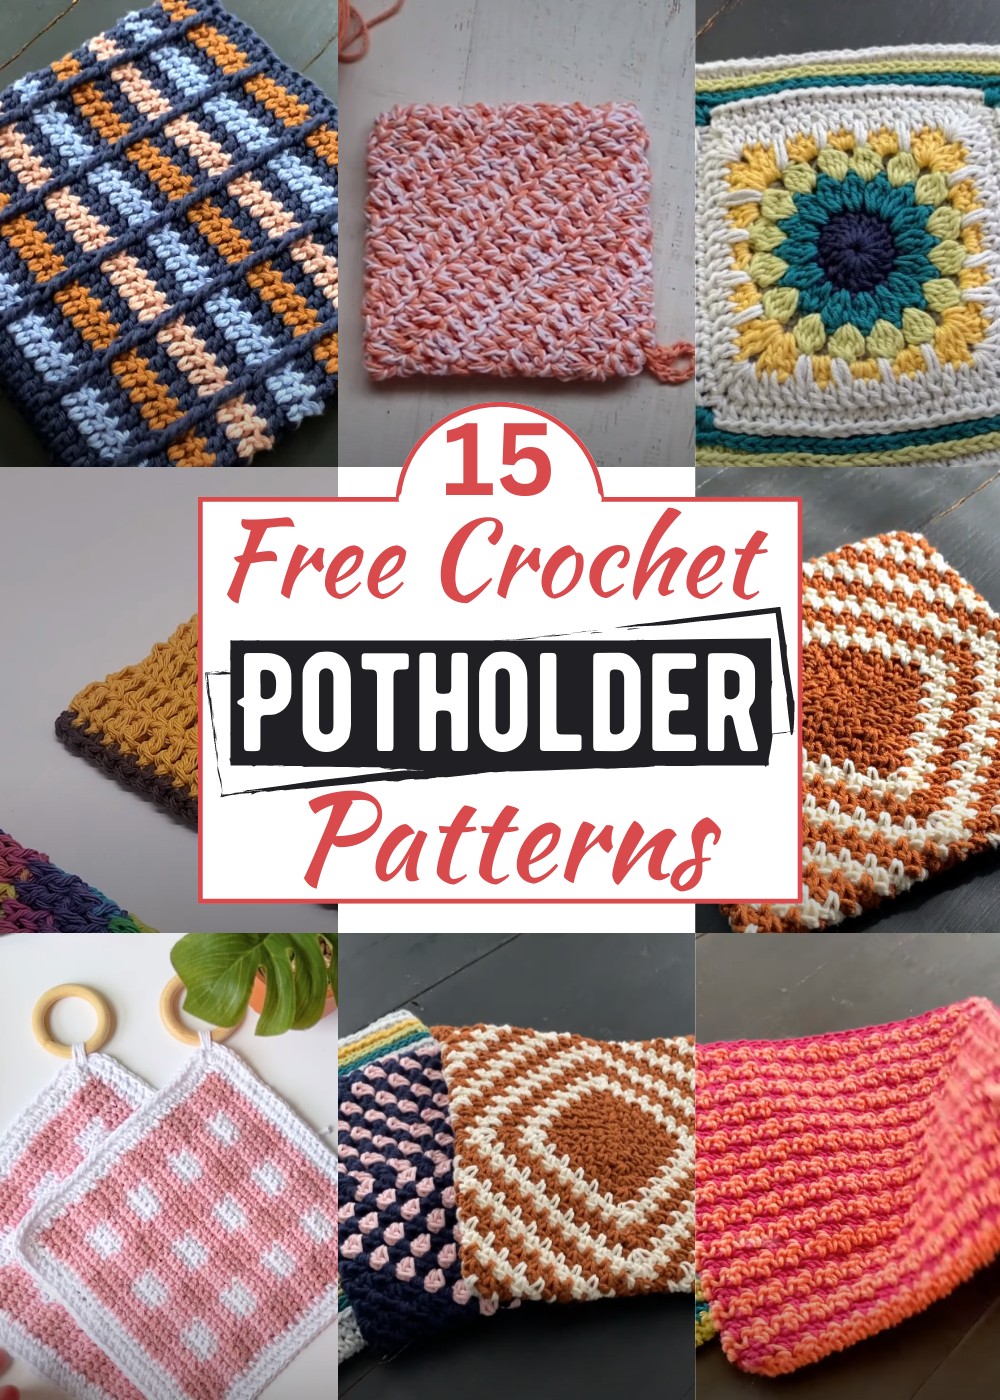 Crochet Potholder Patterns